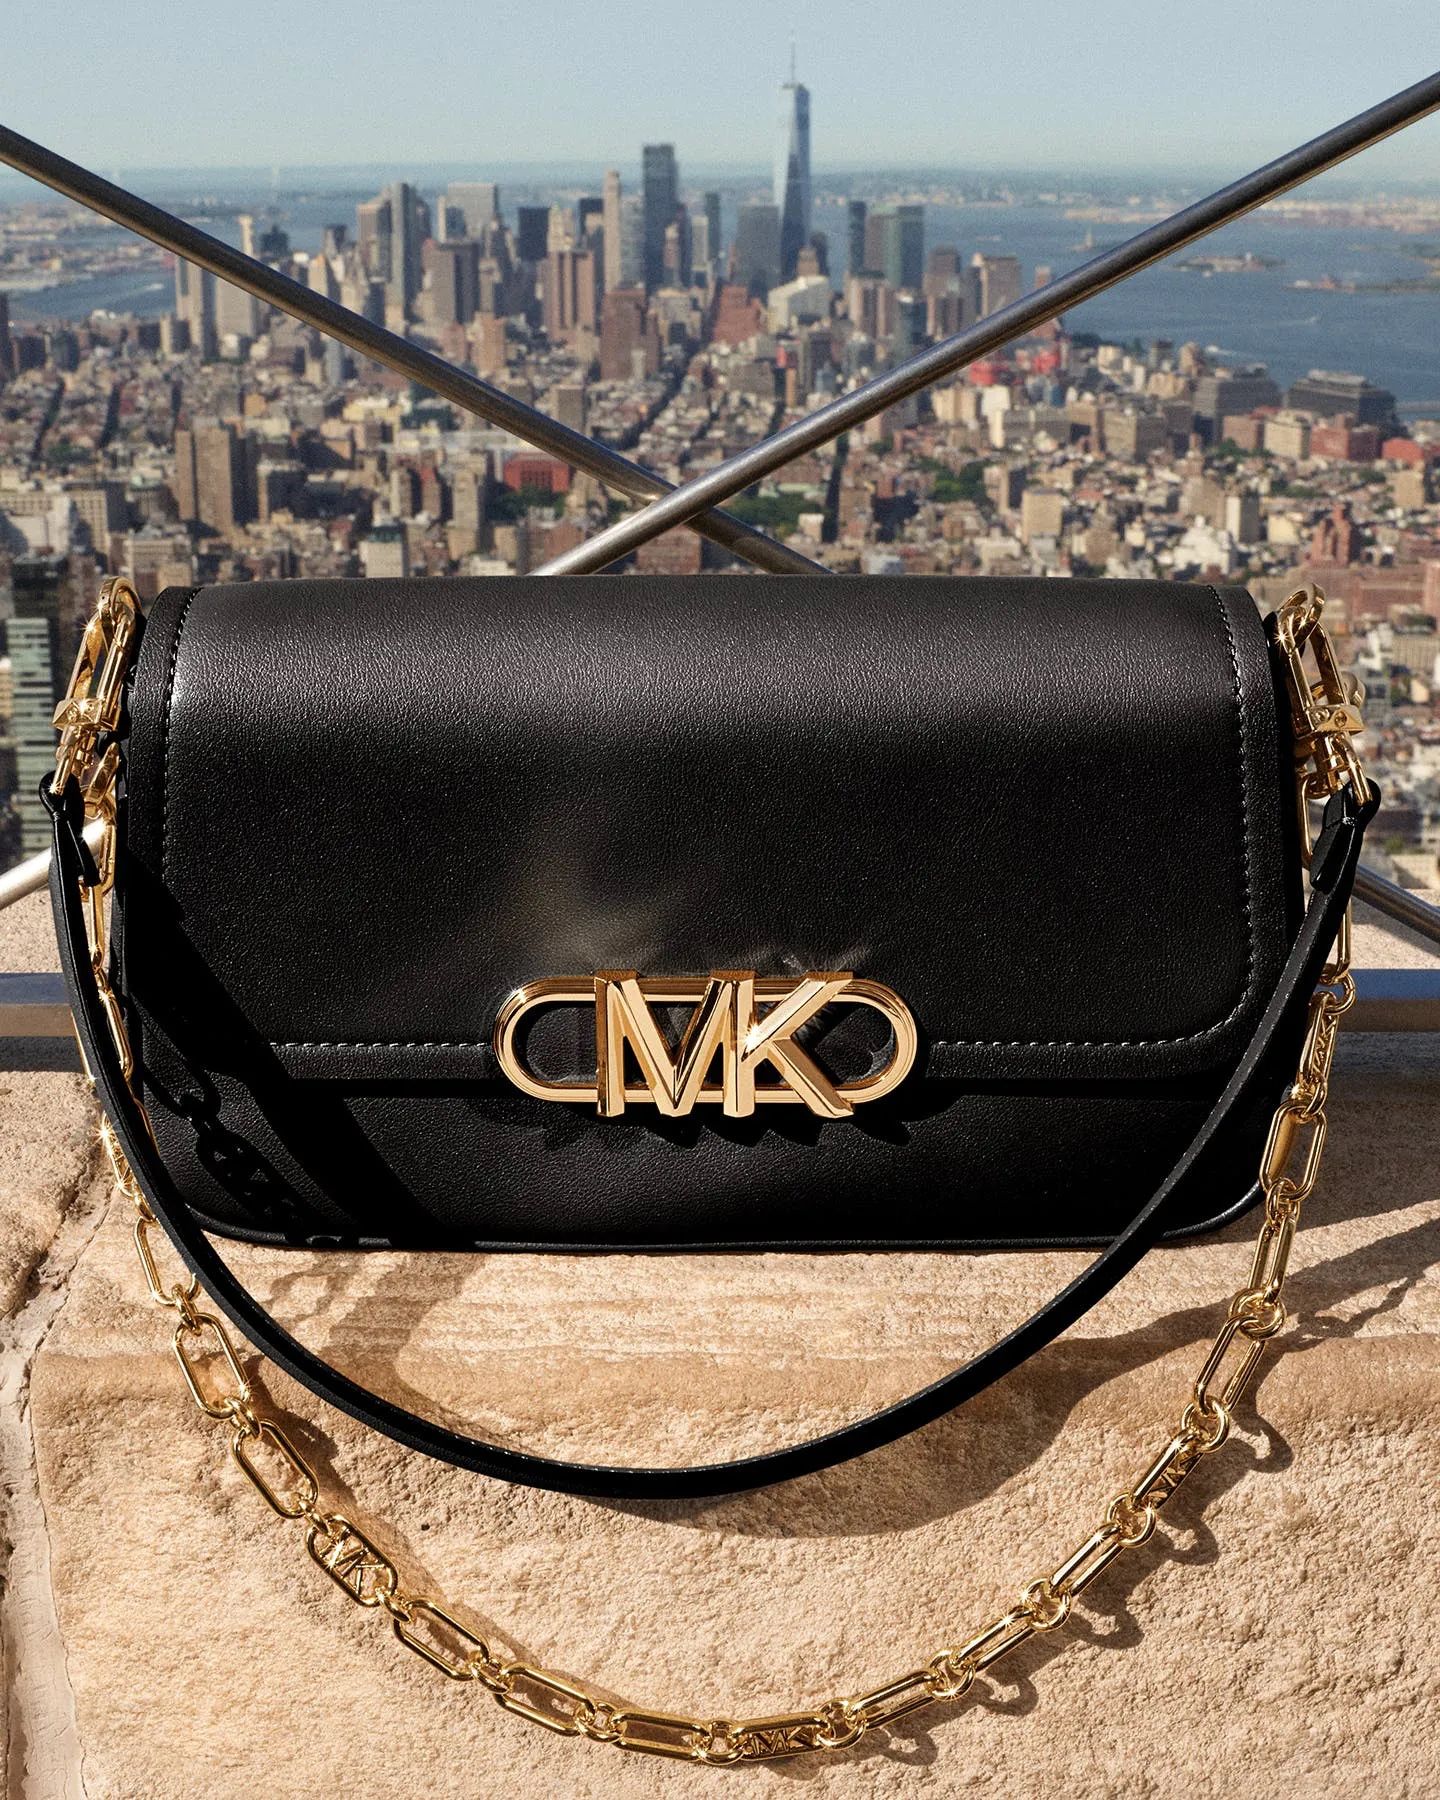 Not your department store's Michael Kors : r/handbags